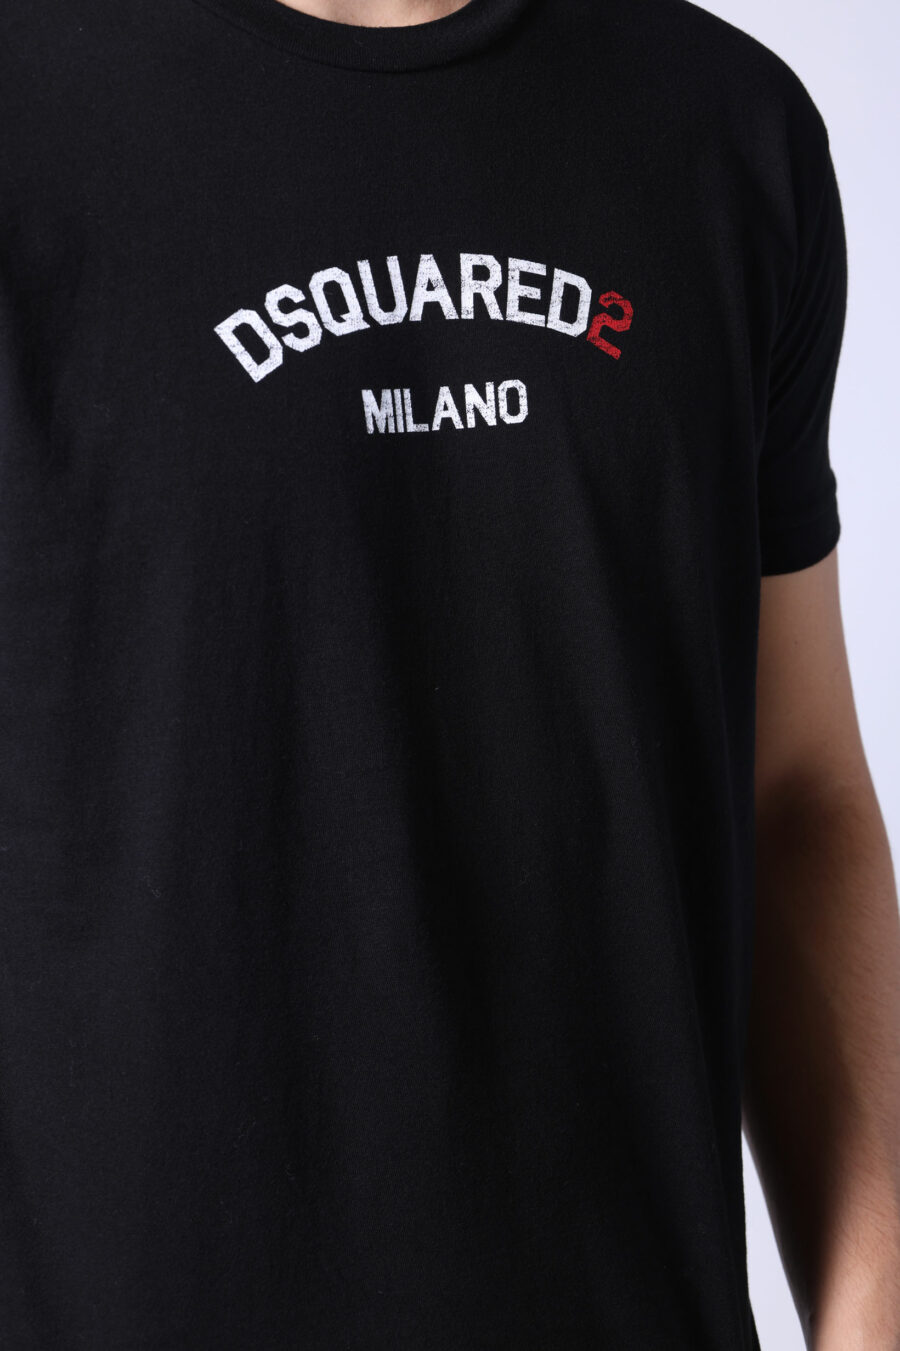 Camiseta negra con minilogo "dsquared2 milano" - Untitled Catalog 05473